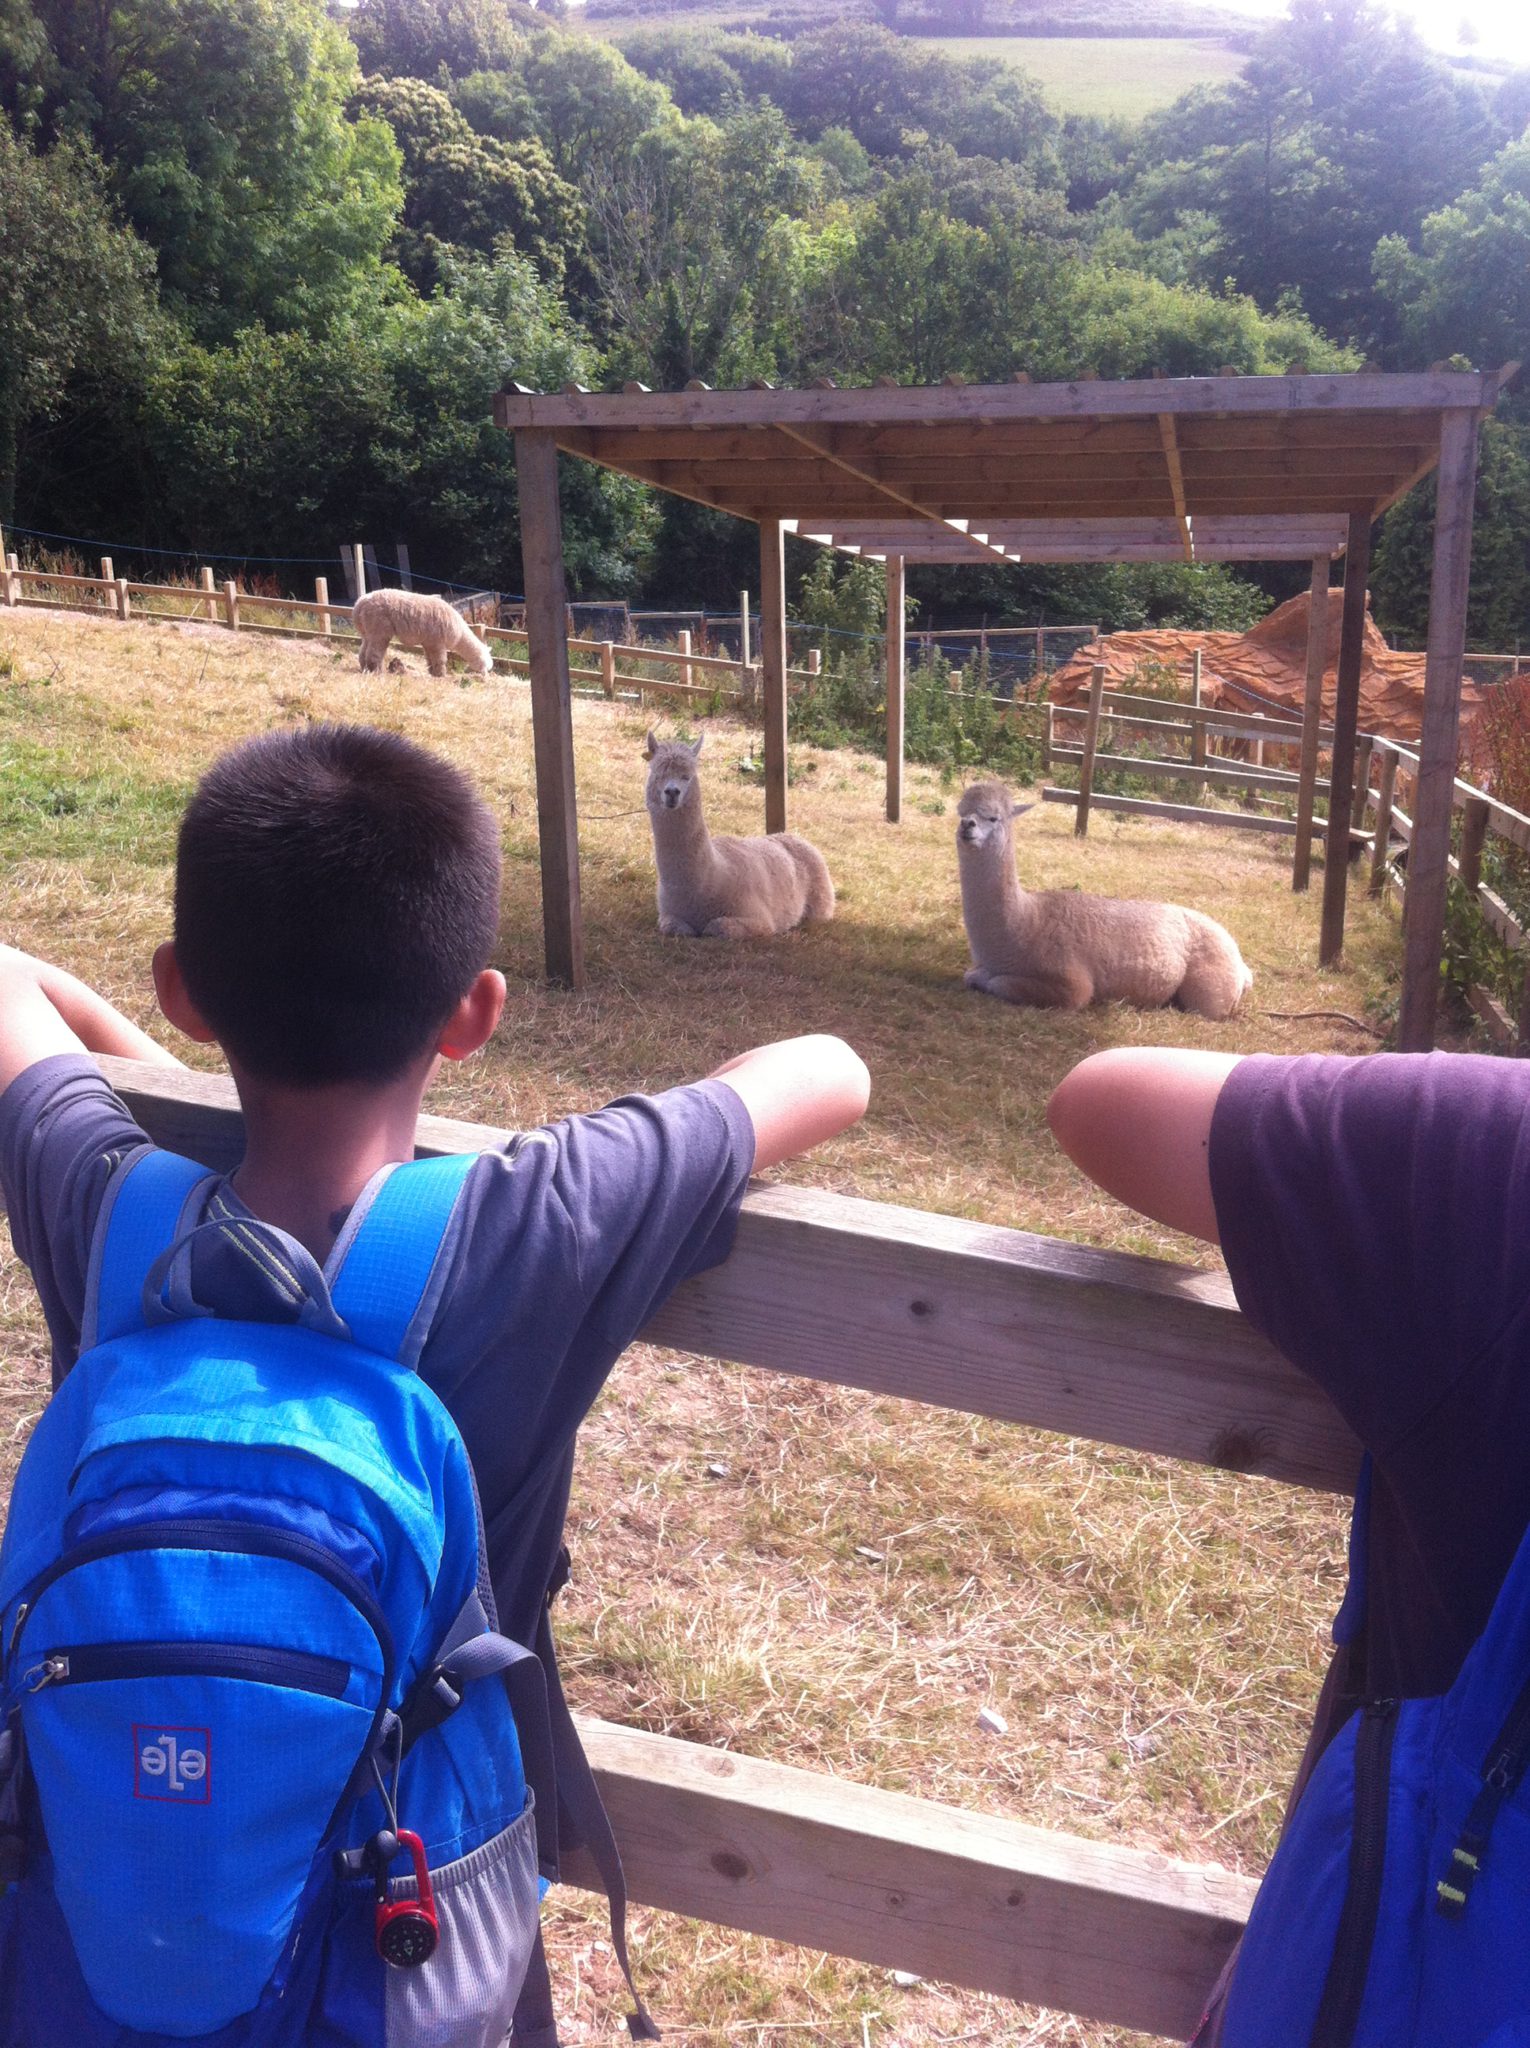 watching the lamas